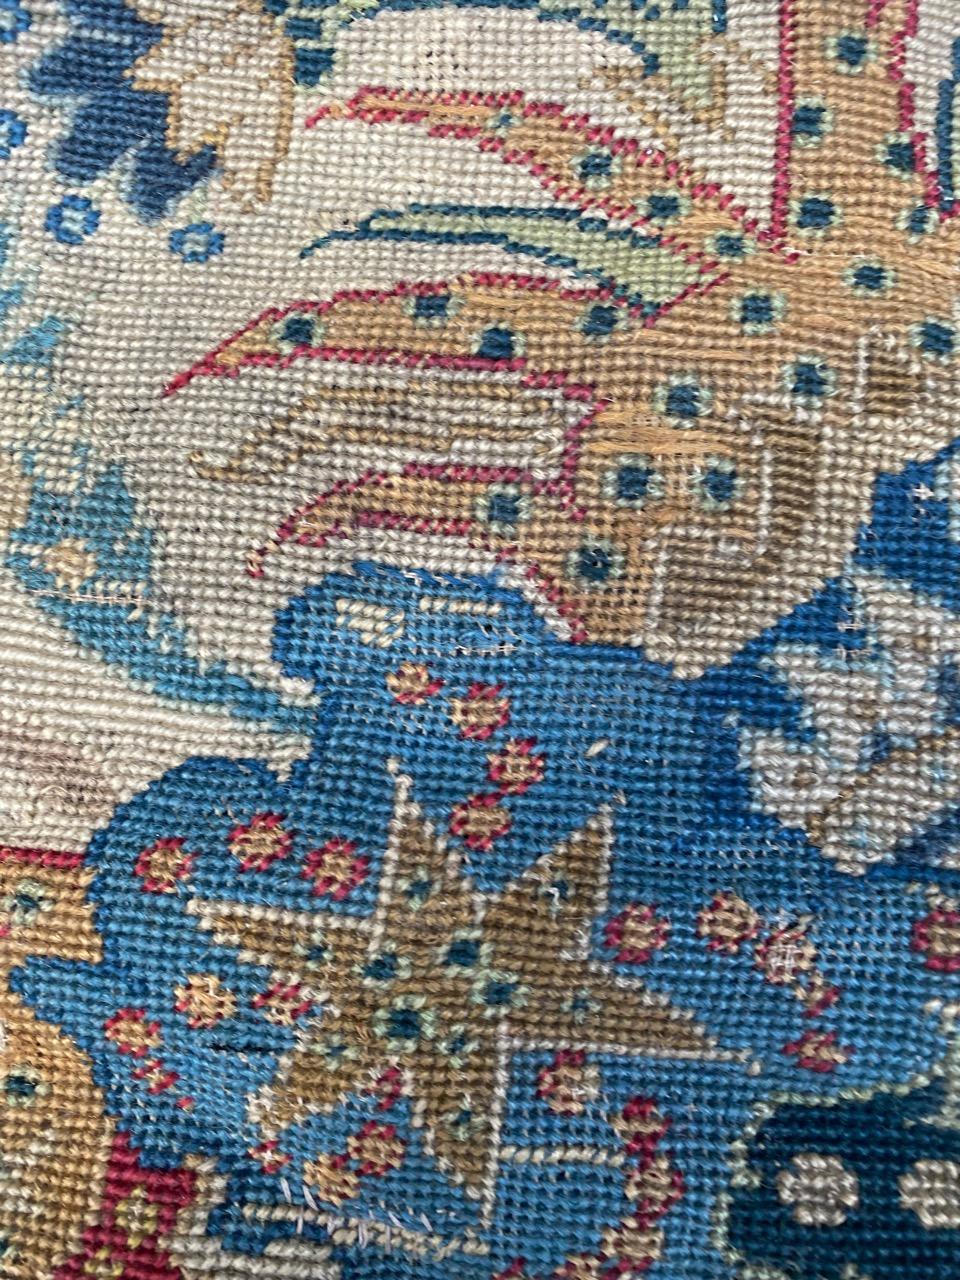 barbara bush needlepoint rug